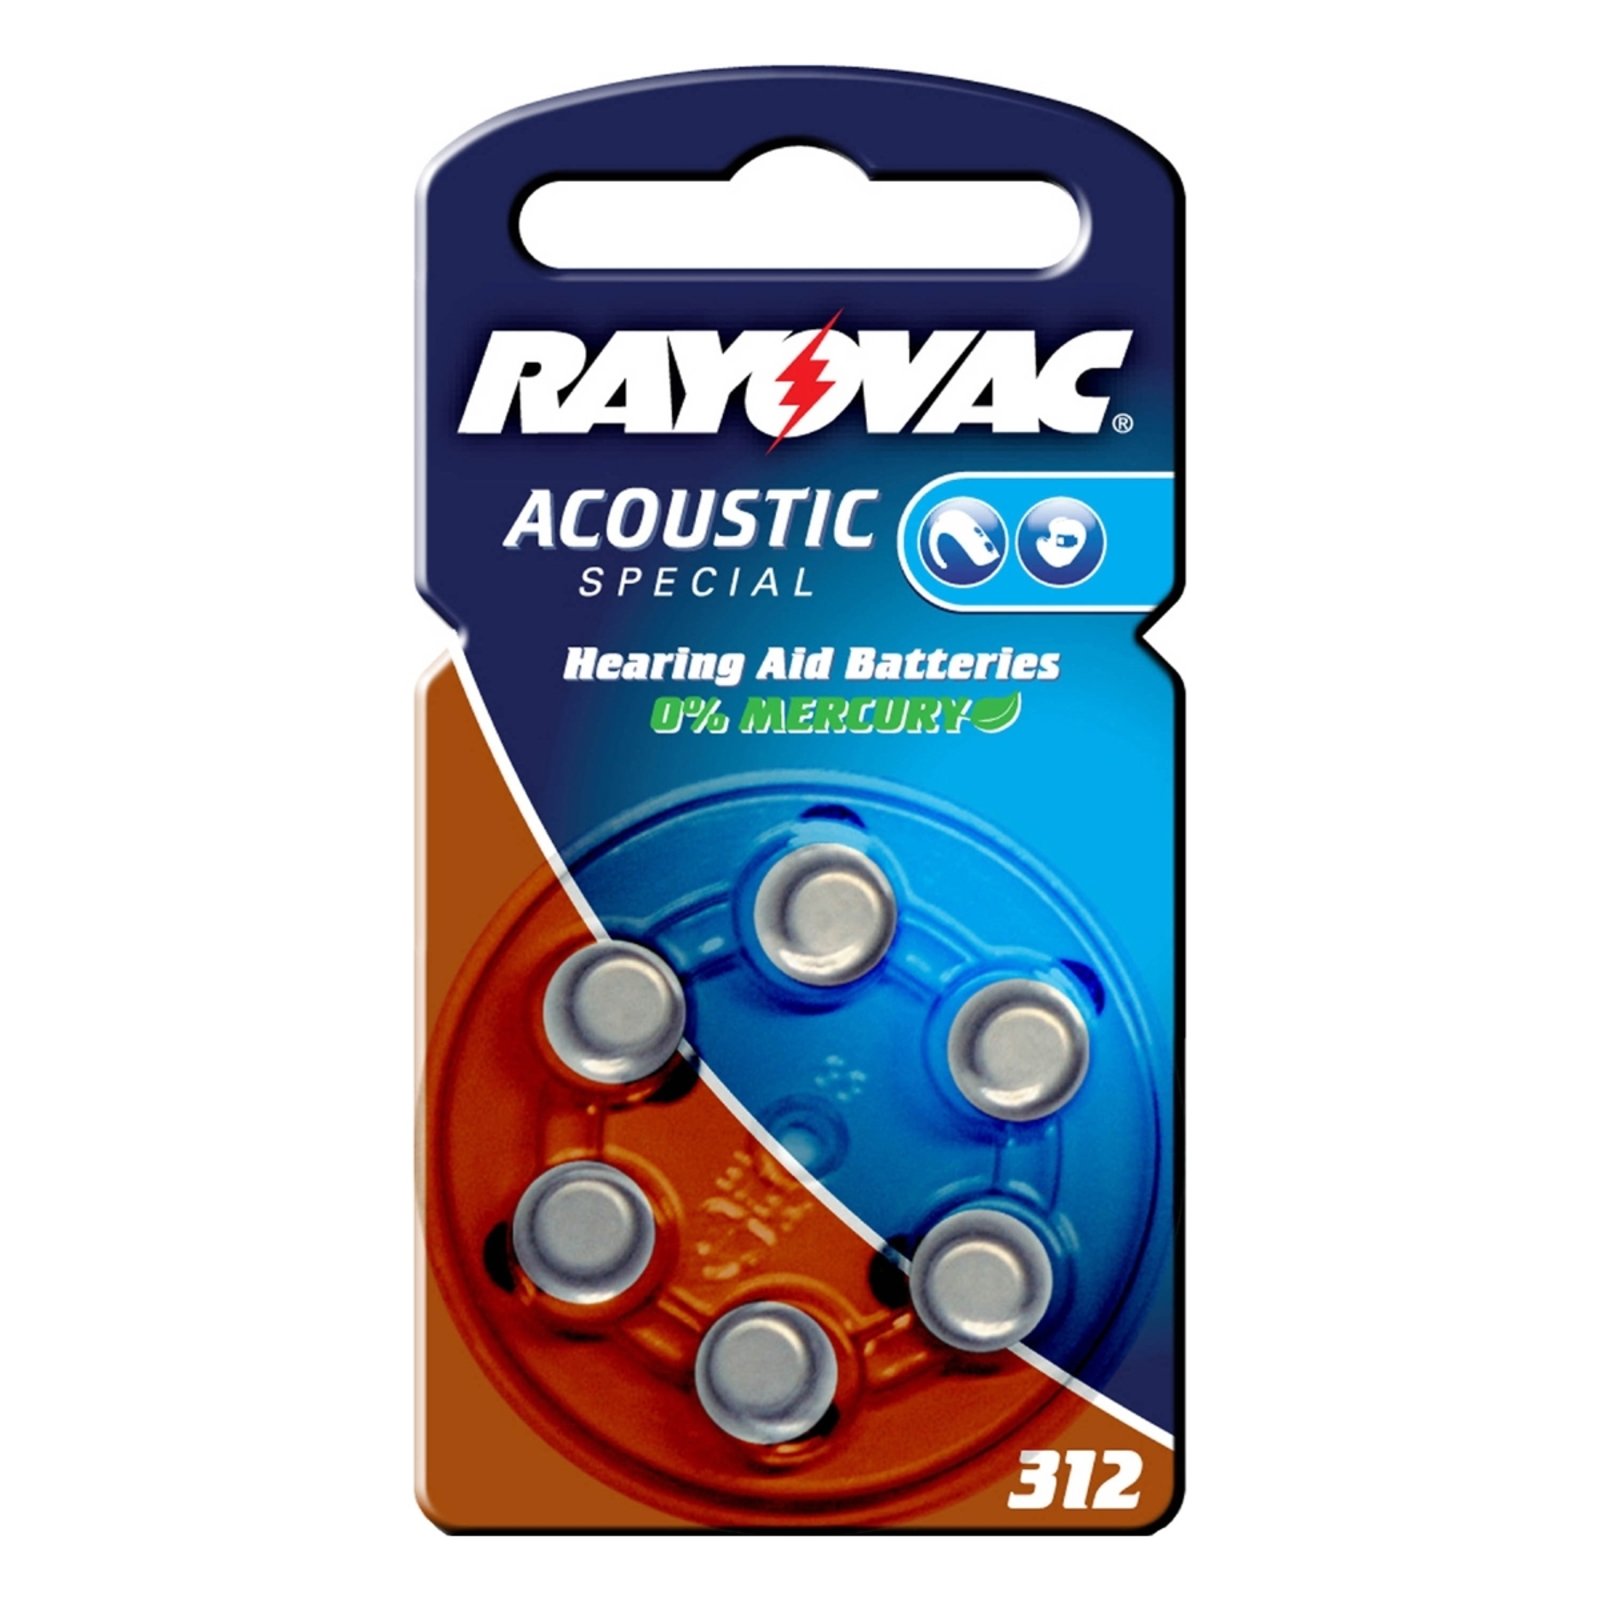 Knopfzelle Rayovac 312 Acoustic 1,4V, 180m/Ah